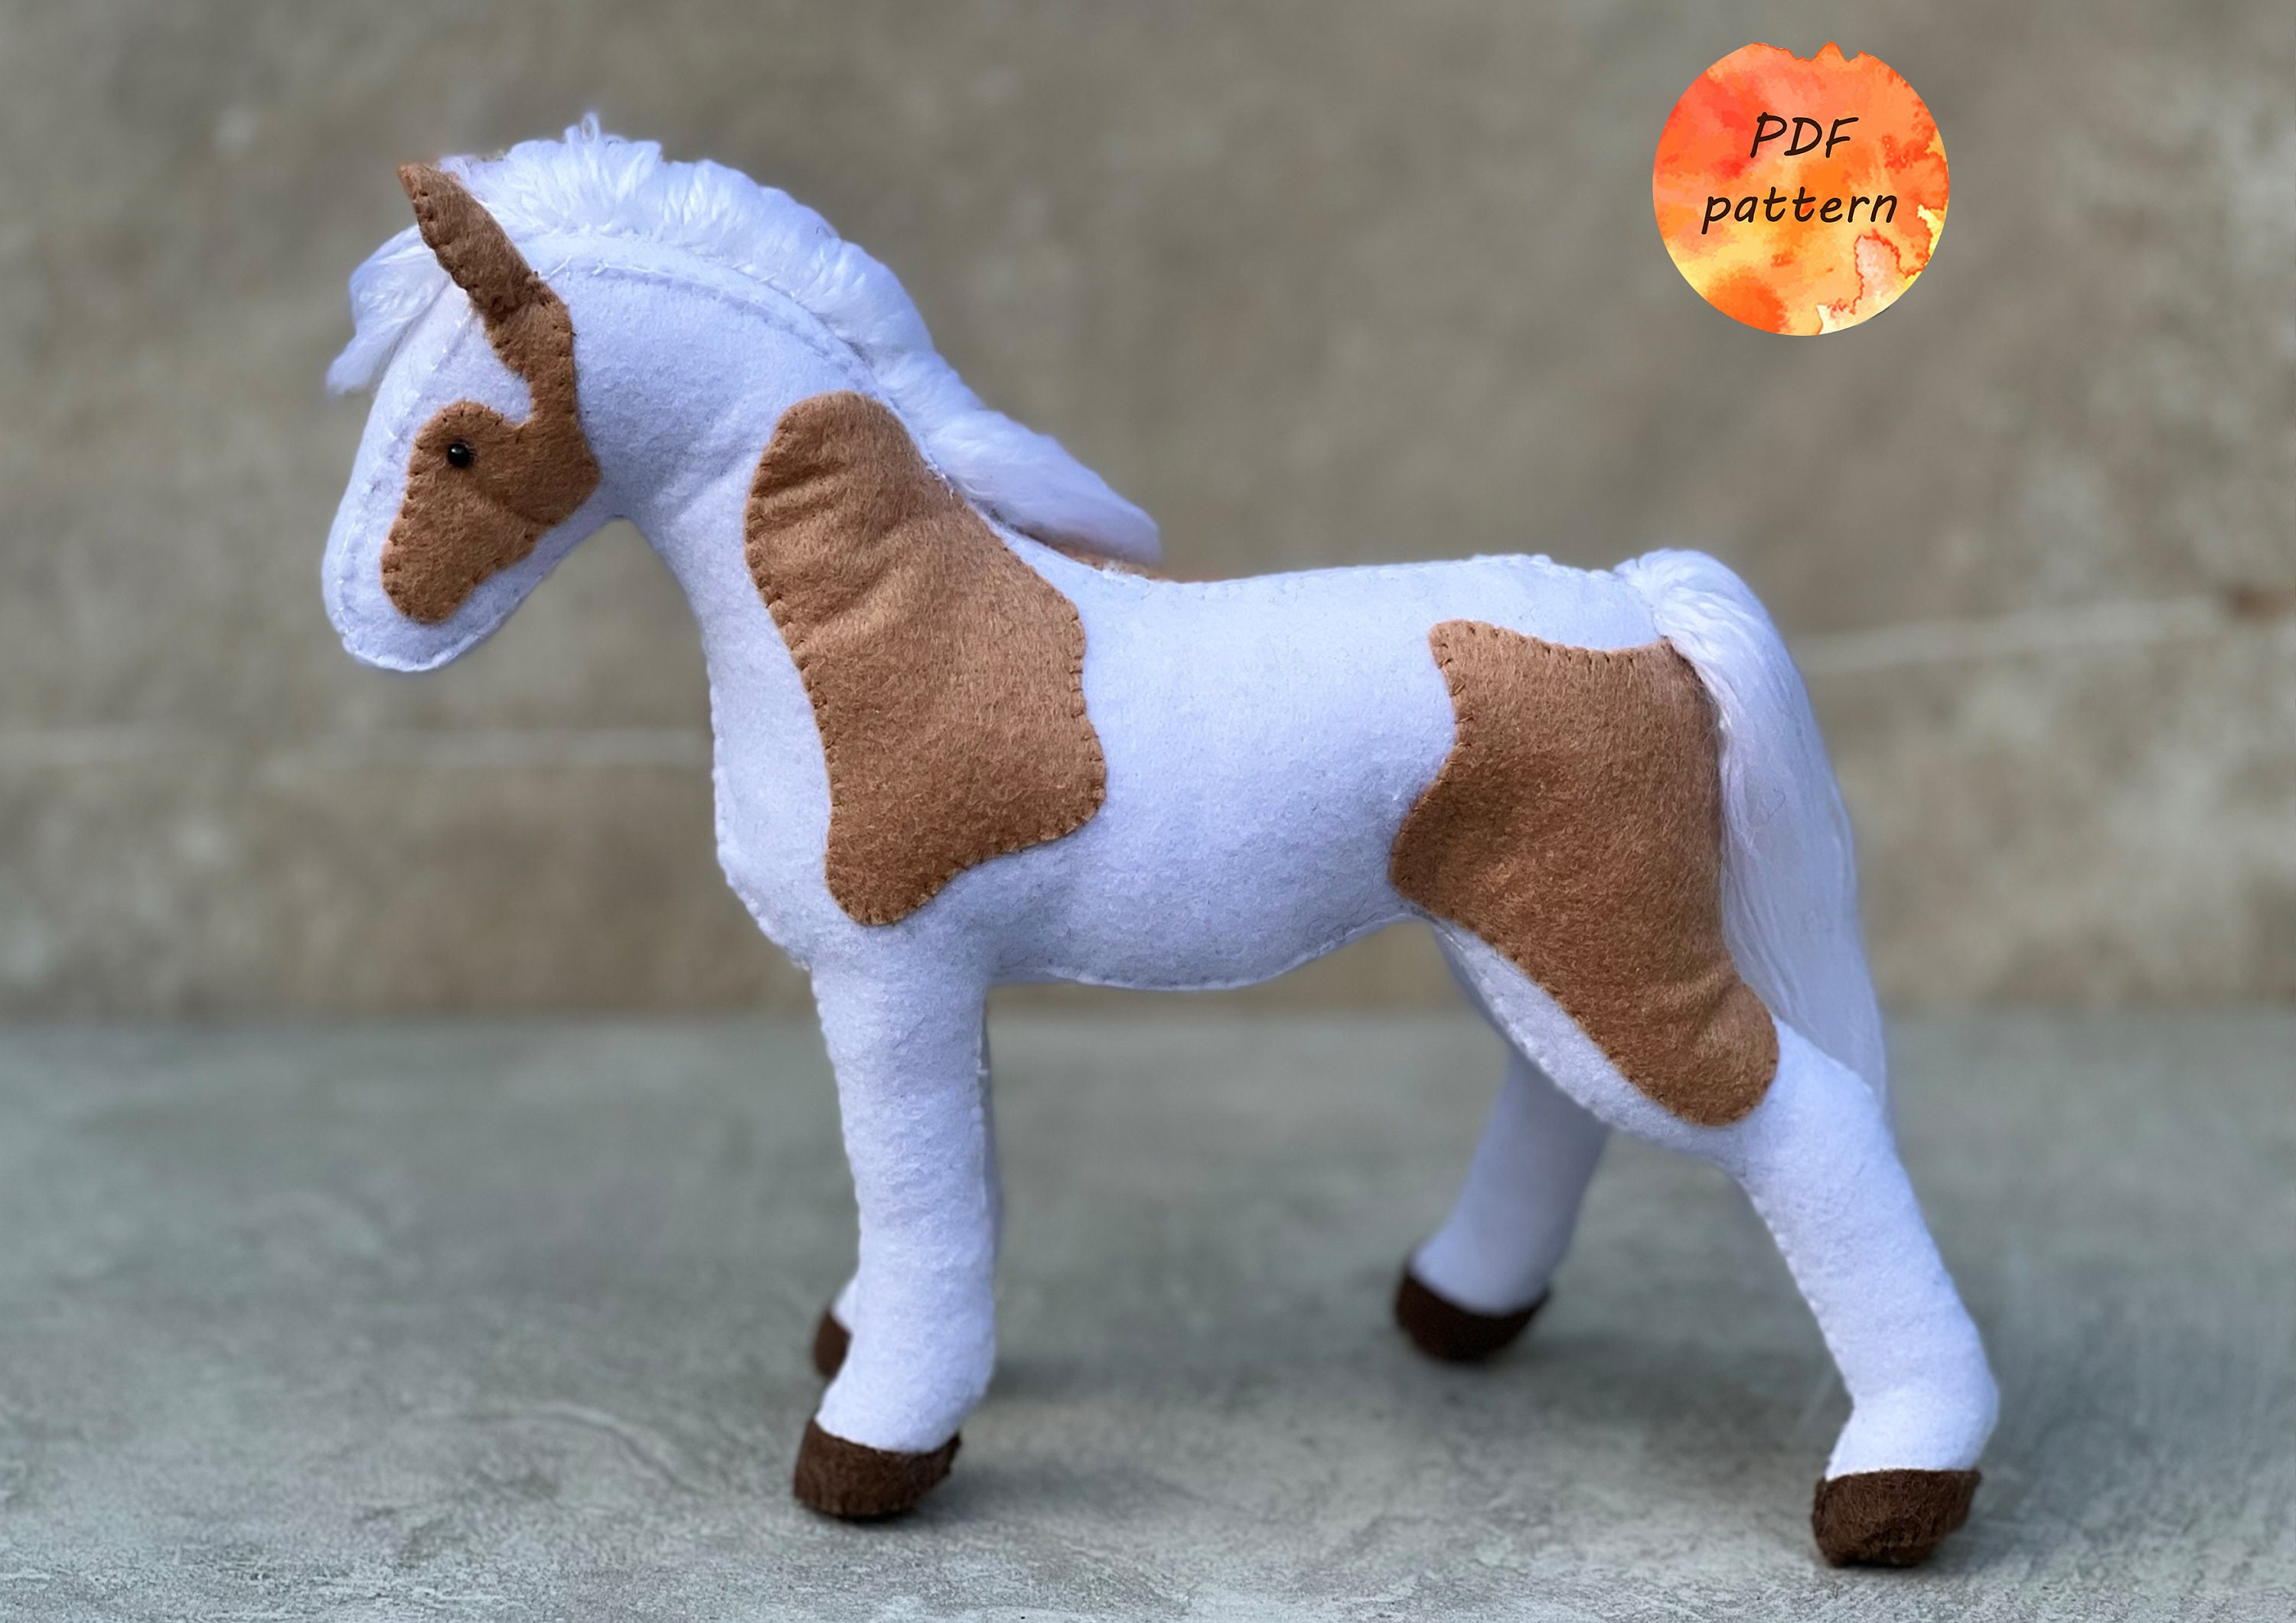 Stitching pony pattern PDF - by LeatherHubPatterns